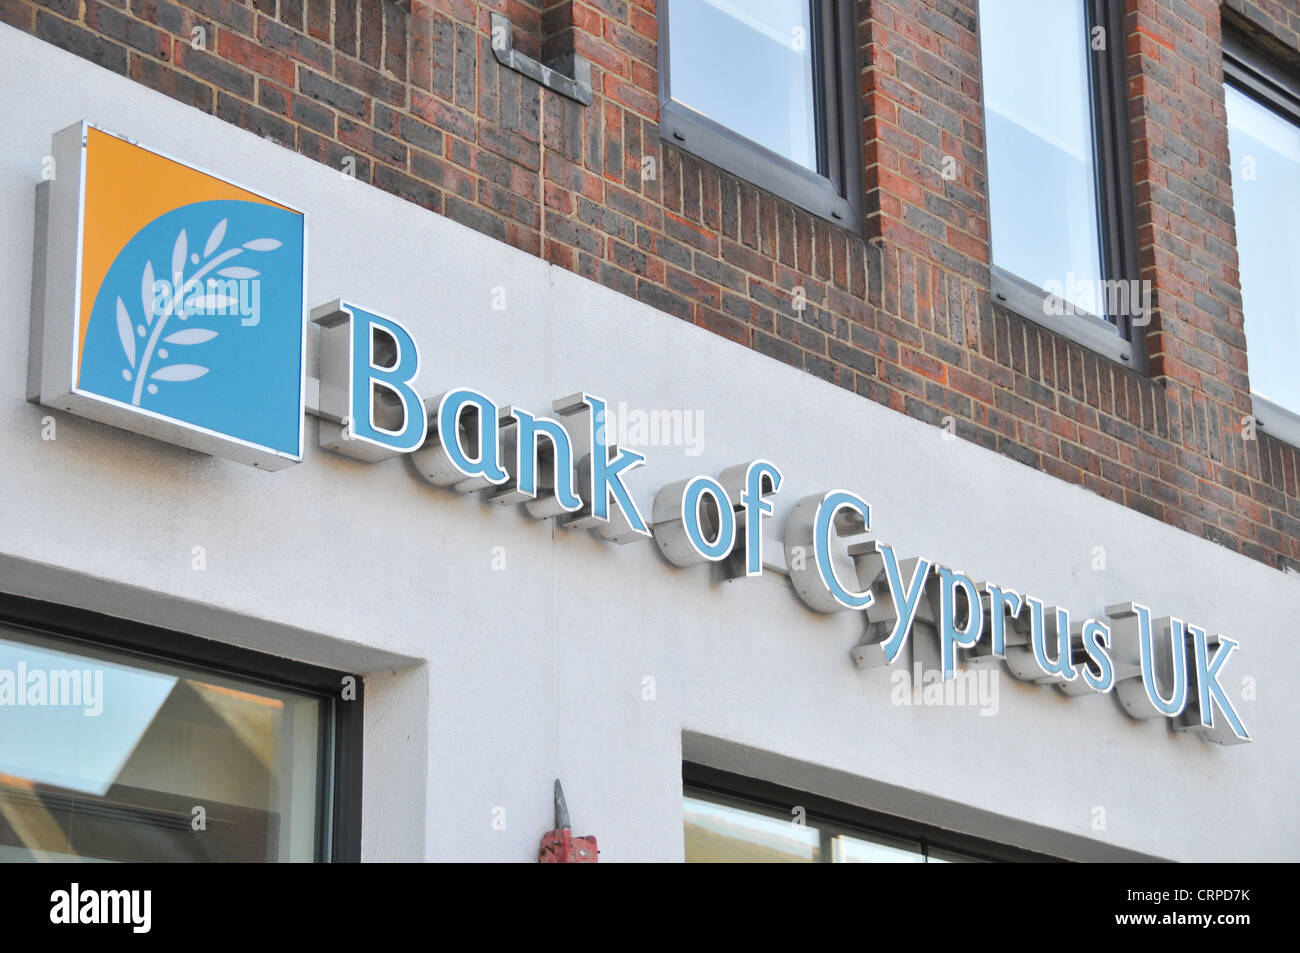 Bank of Cyprus UK bailout Eurozone banking crisis euro bank crisis Stock Photo